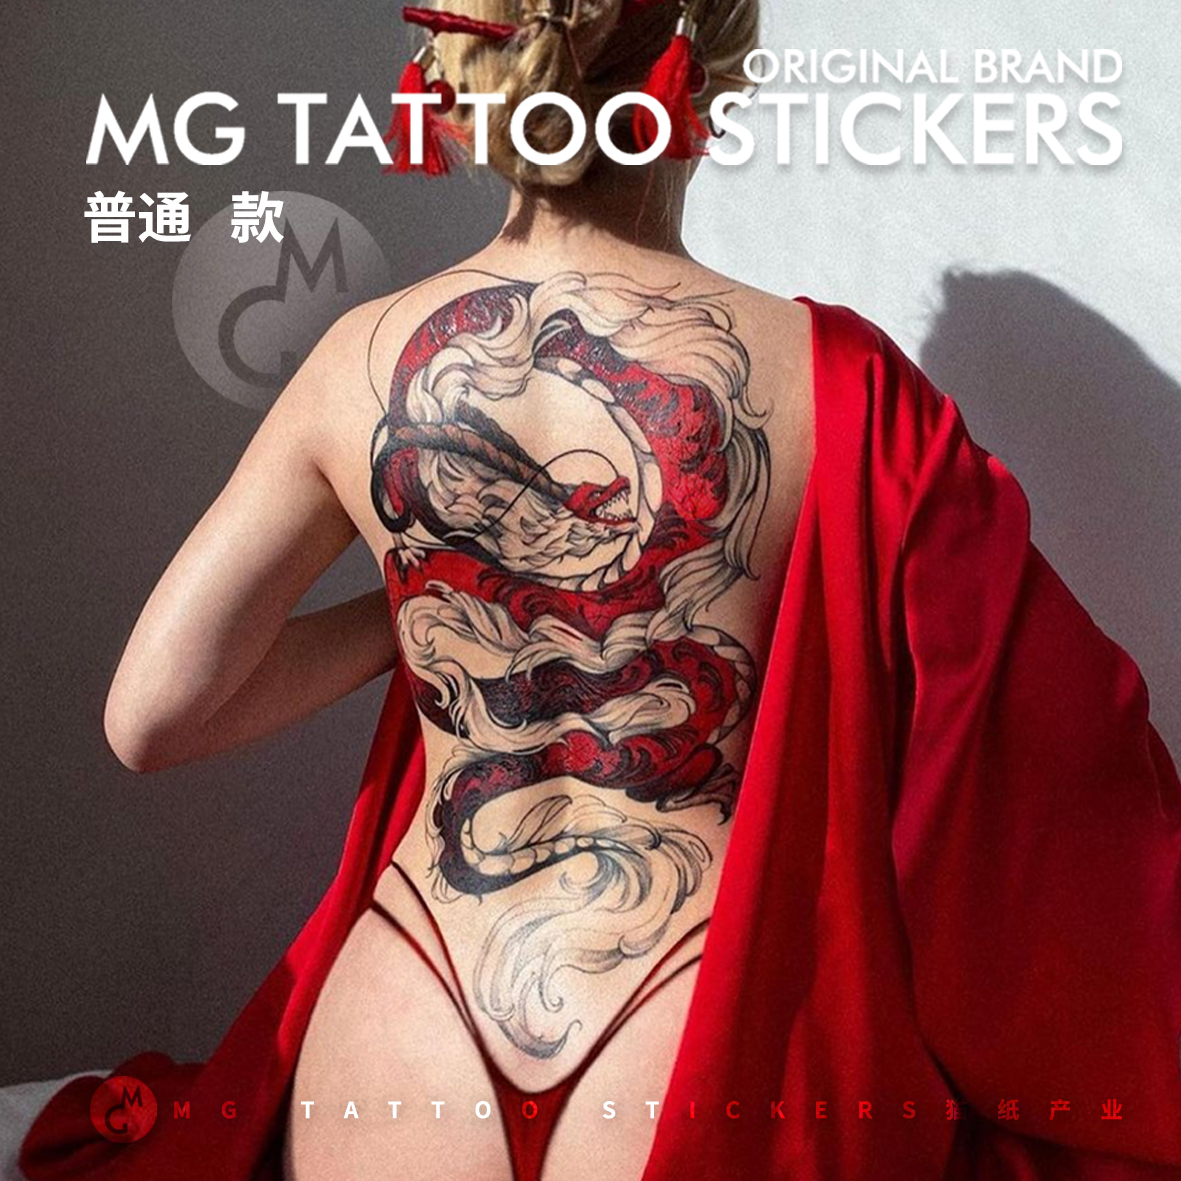 MG tattoo 华丽荣耀 新中式盘龙满背大图威严与优雅纹身贴纸男女